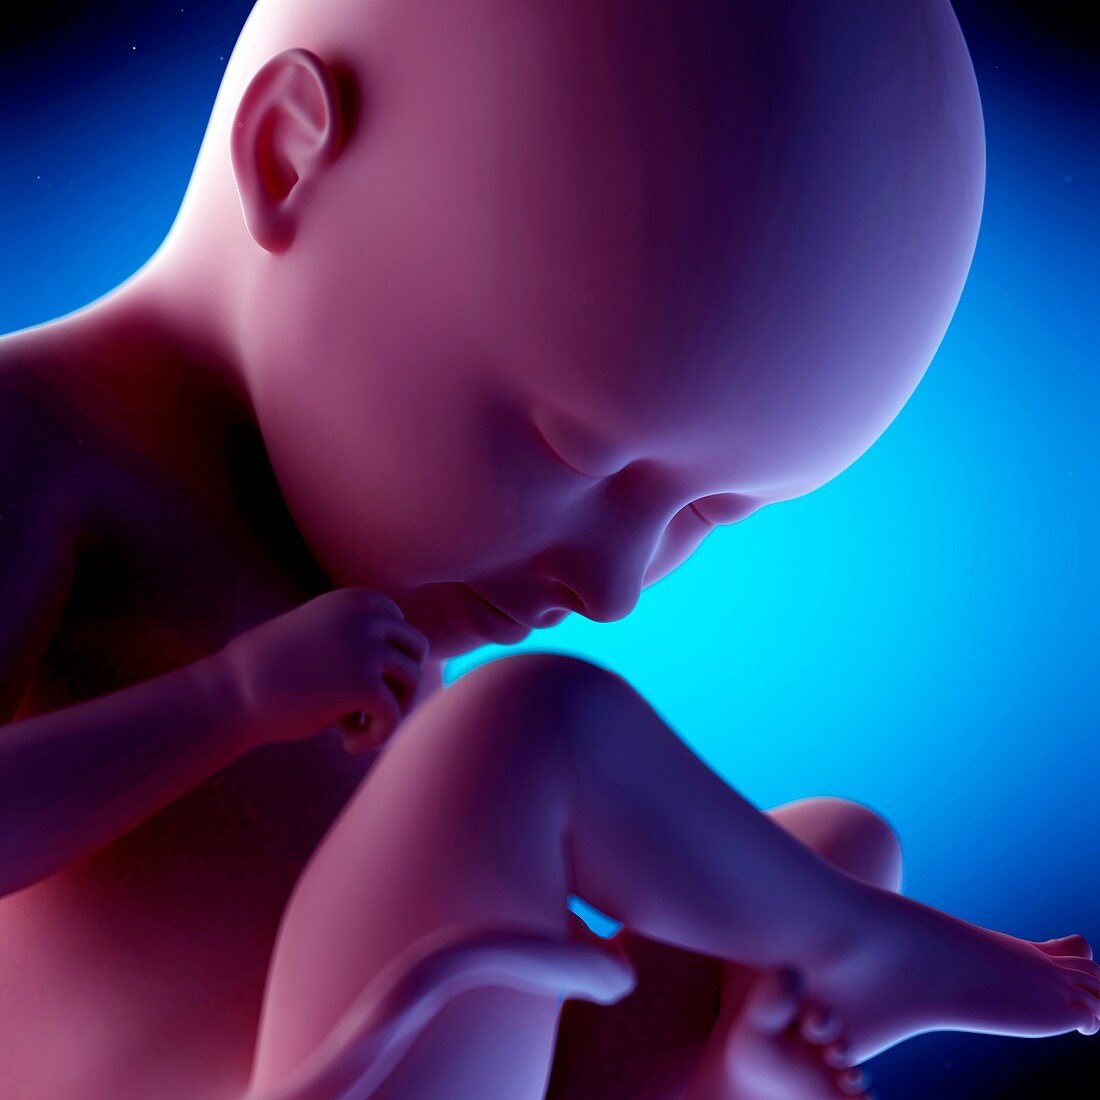 Human fetus at week 35 of gestation, illustration